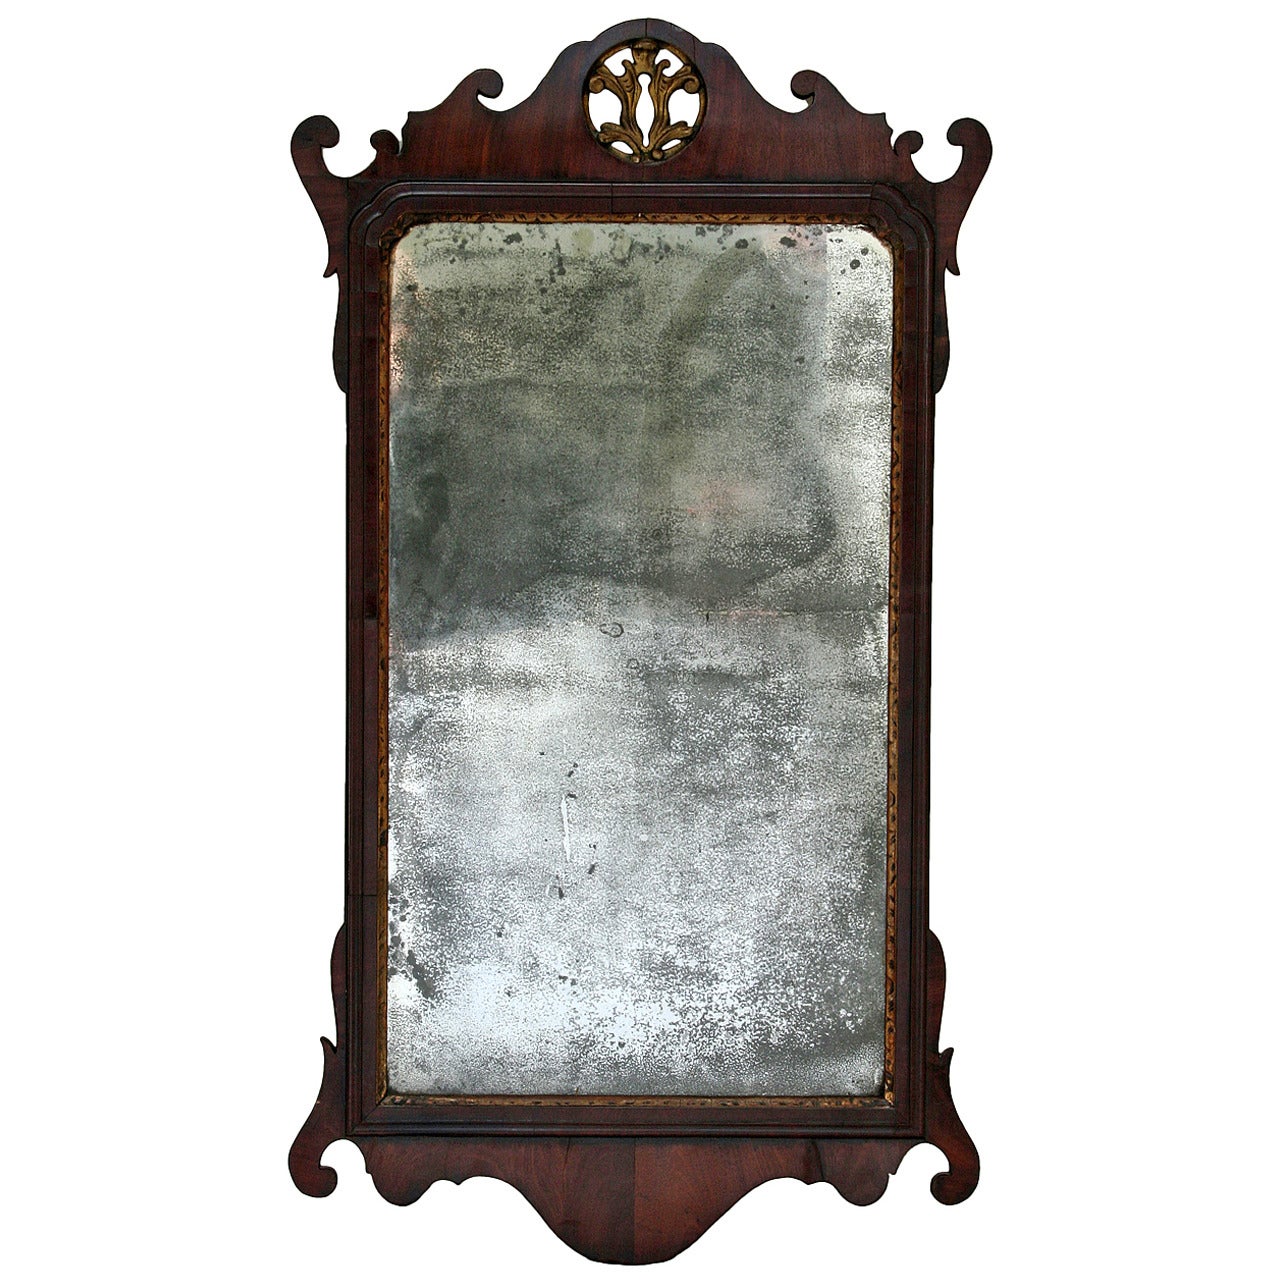 Mahogany and Parcel Gilt Wall Mirror, English 18th Century